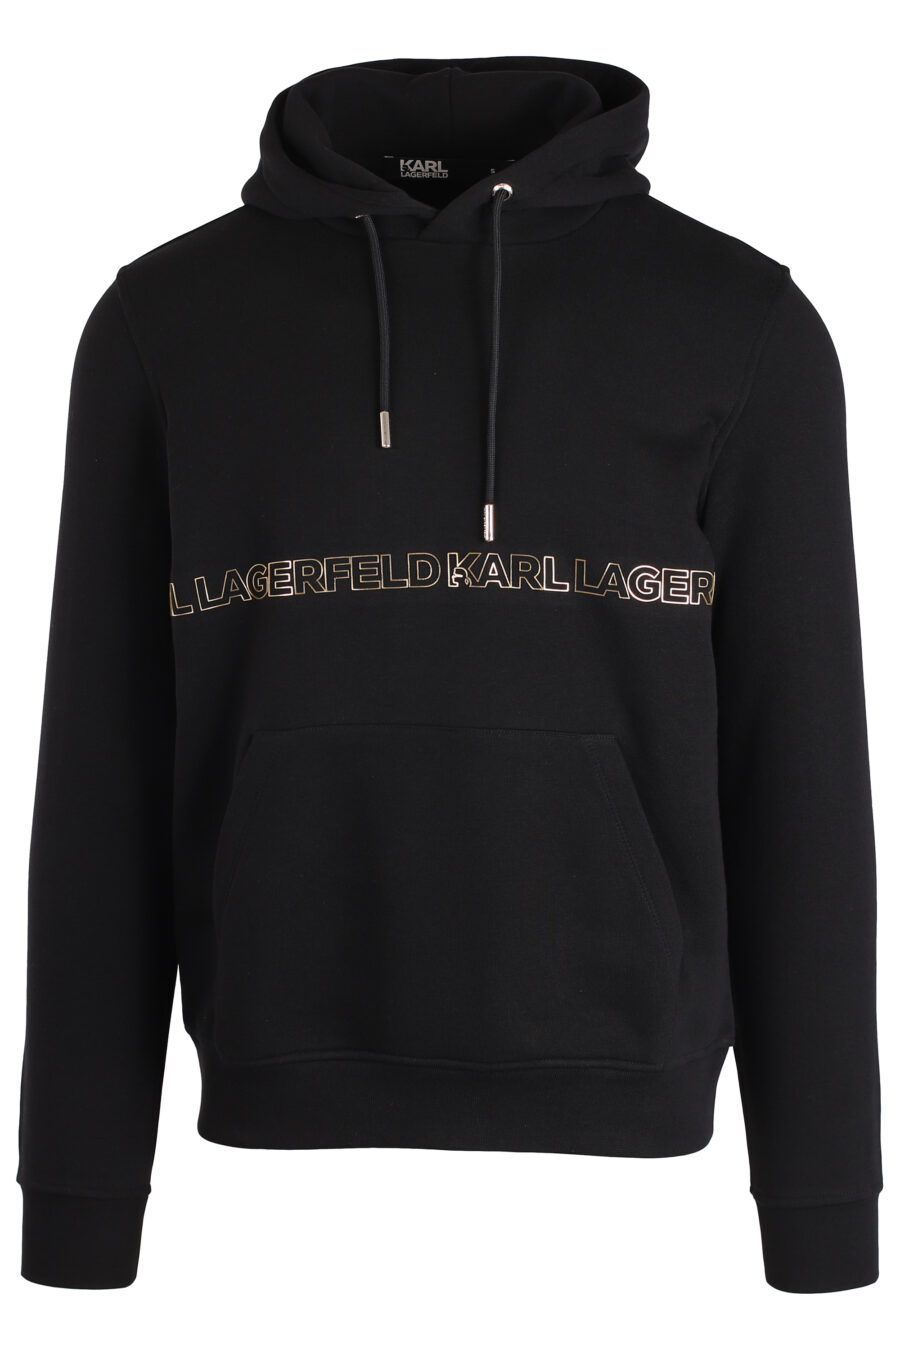 Black hooded sweatshirt with gold logo at waist - IMG 3973